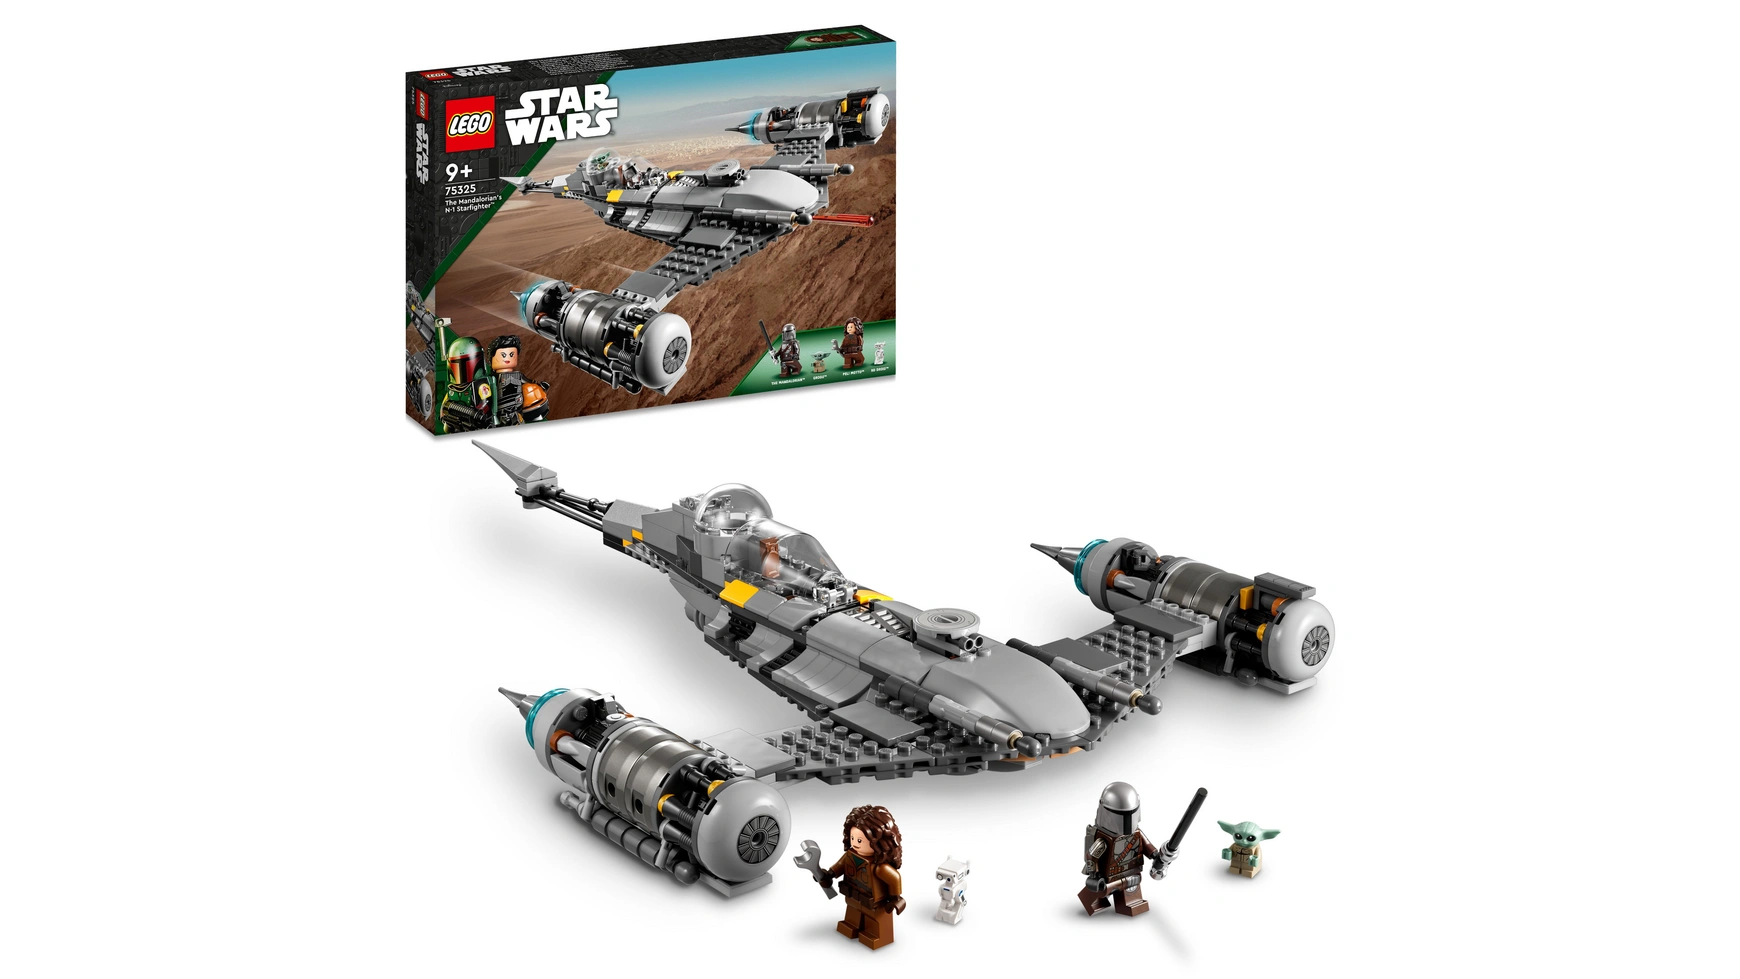 Lego Star Wars Набор Звездный истребитель Мандалорца Н-1